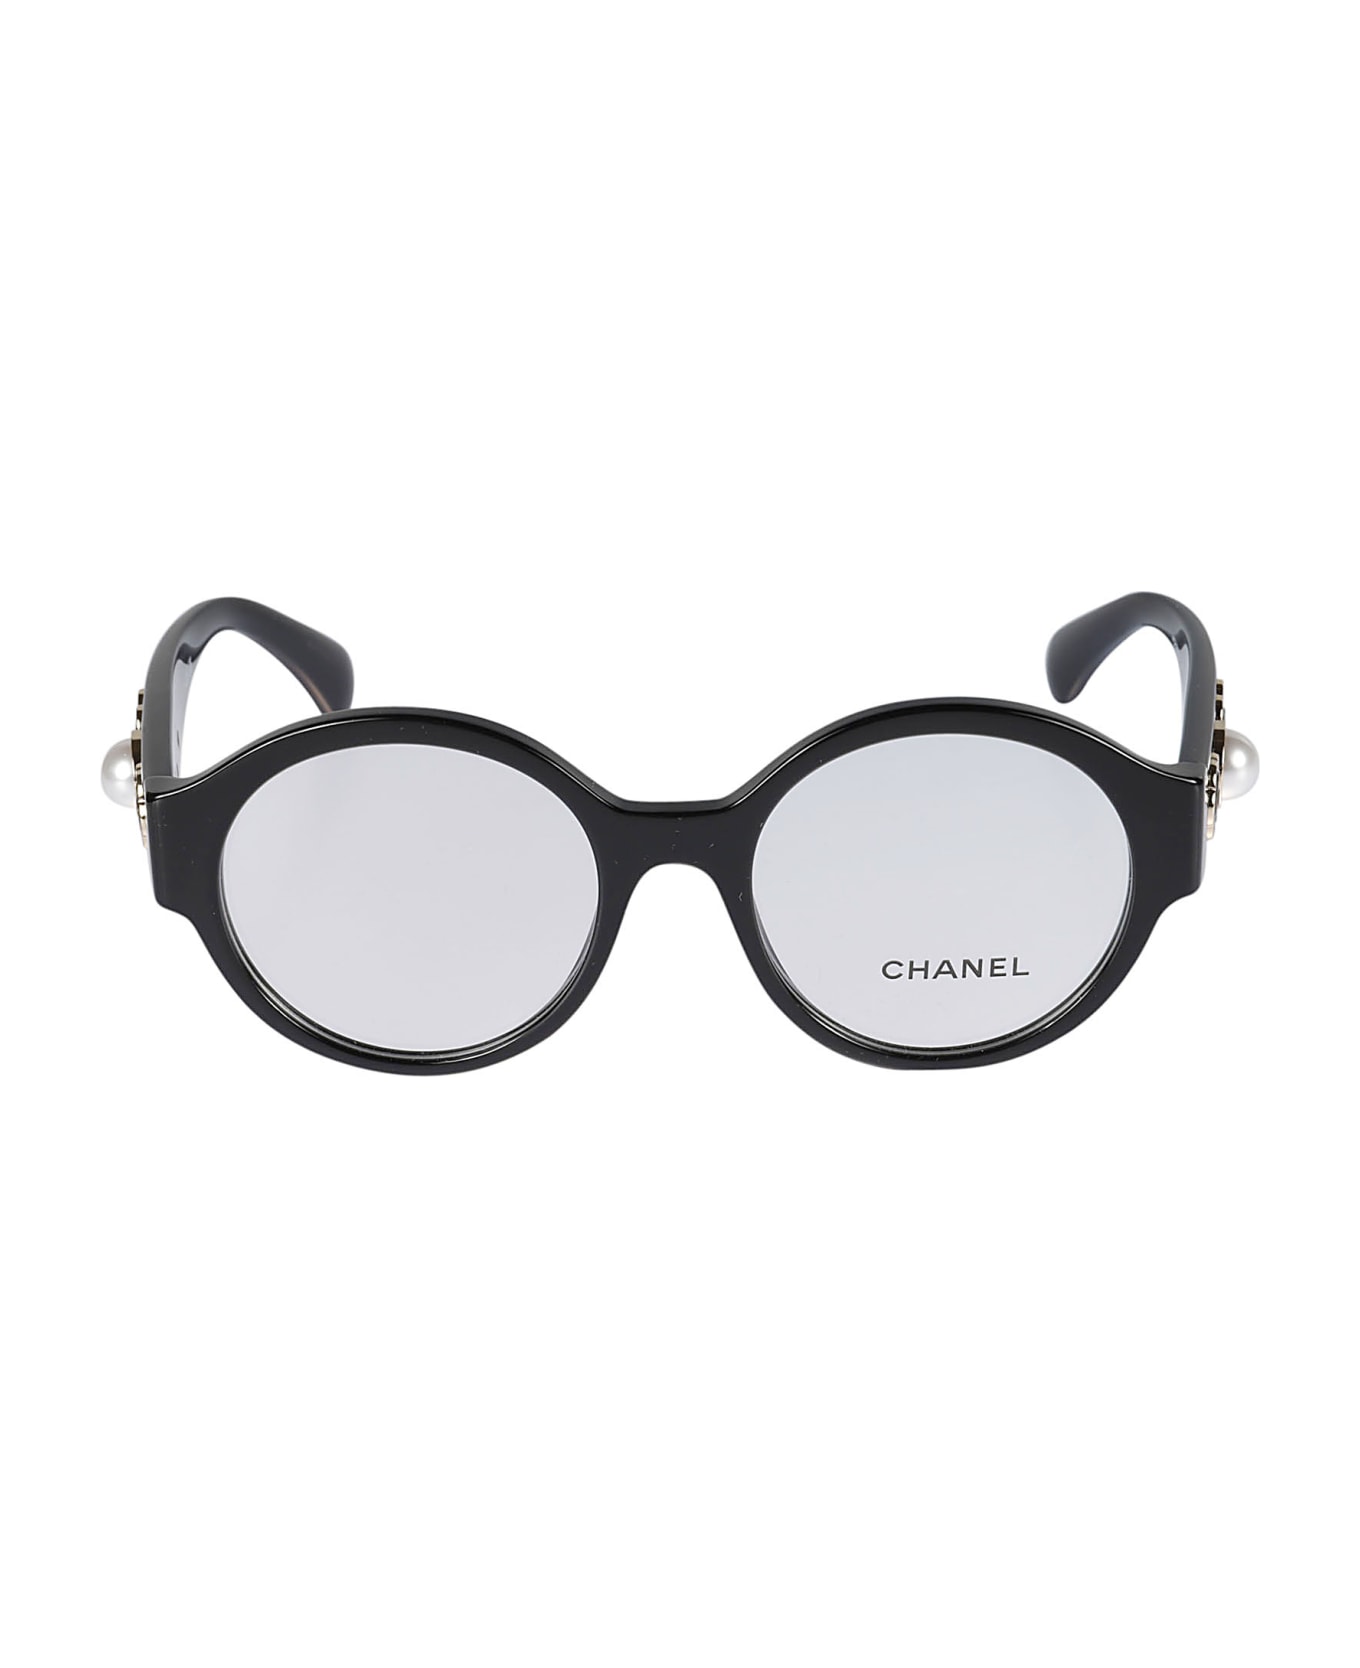 Chanel Round Eye Glasses - N/A